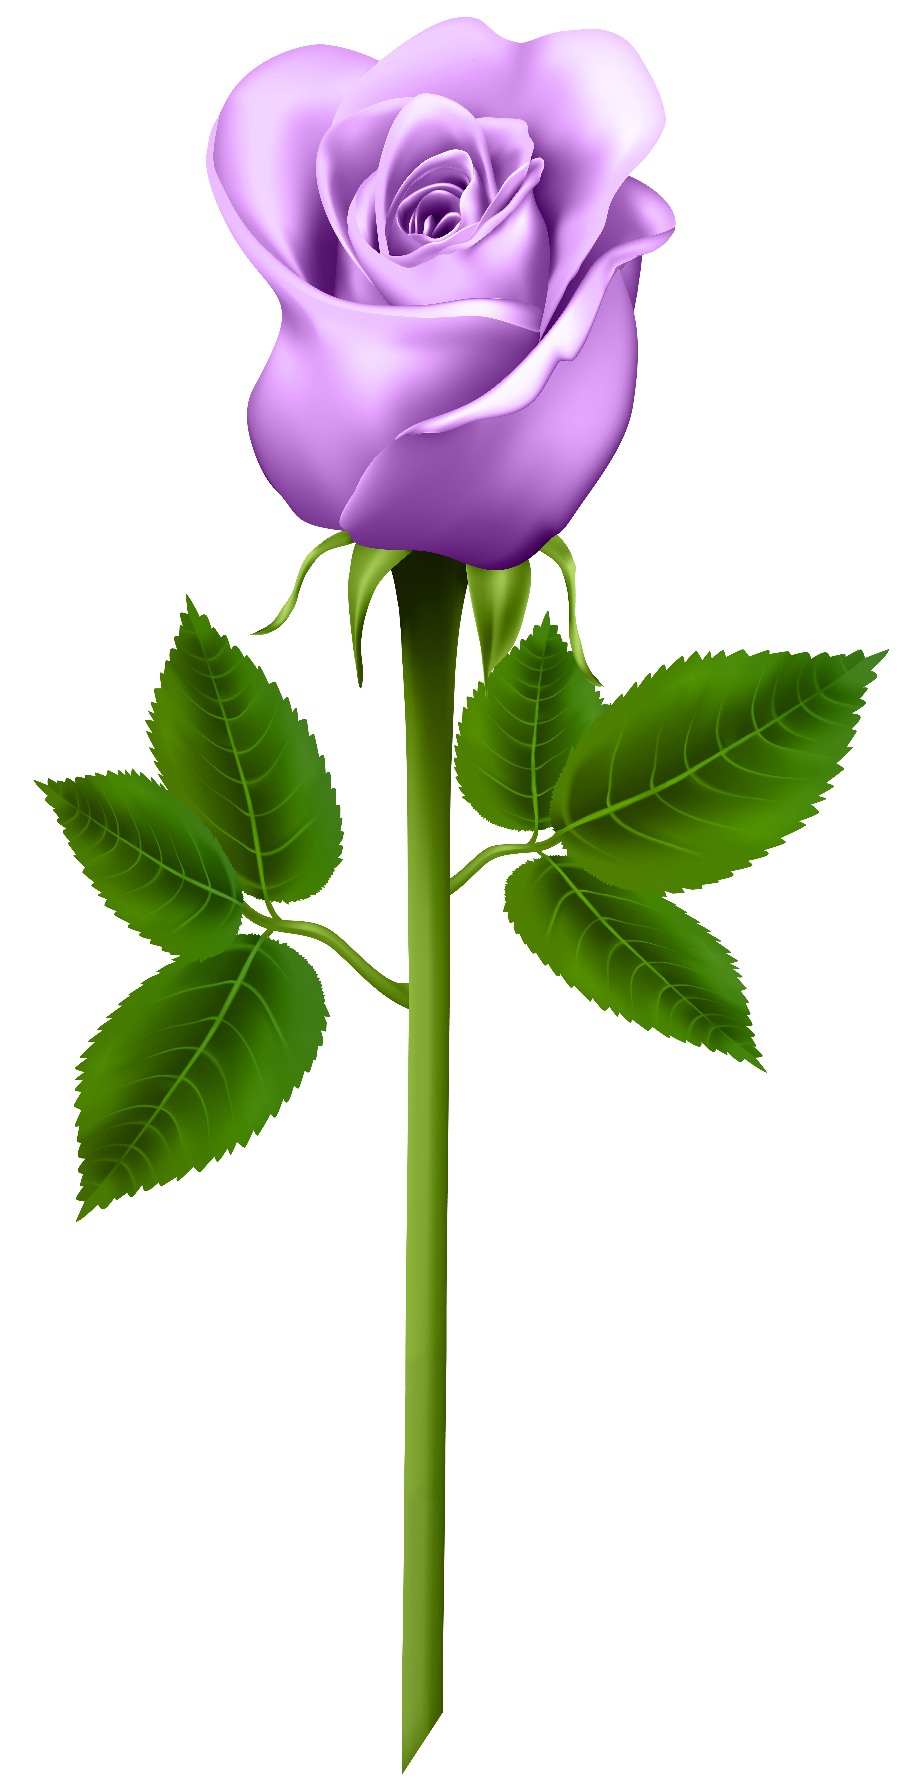 roses clipart purple